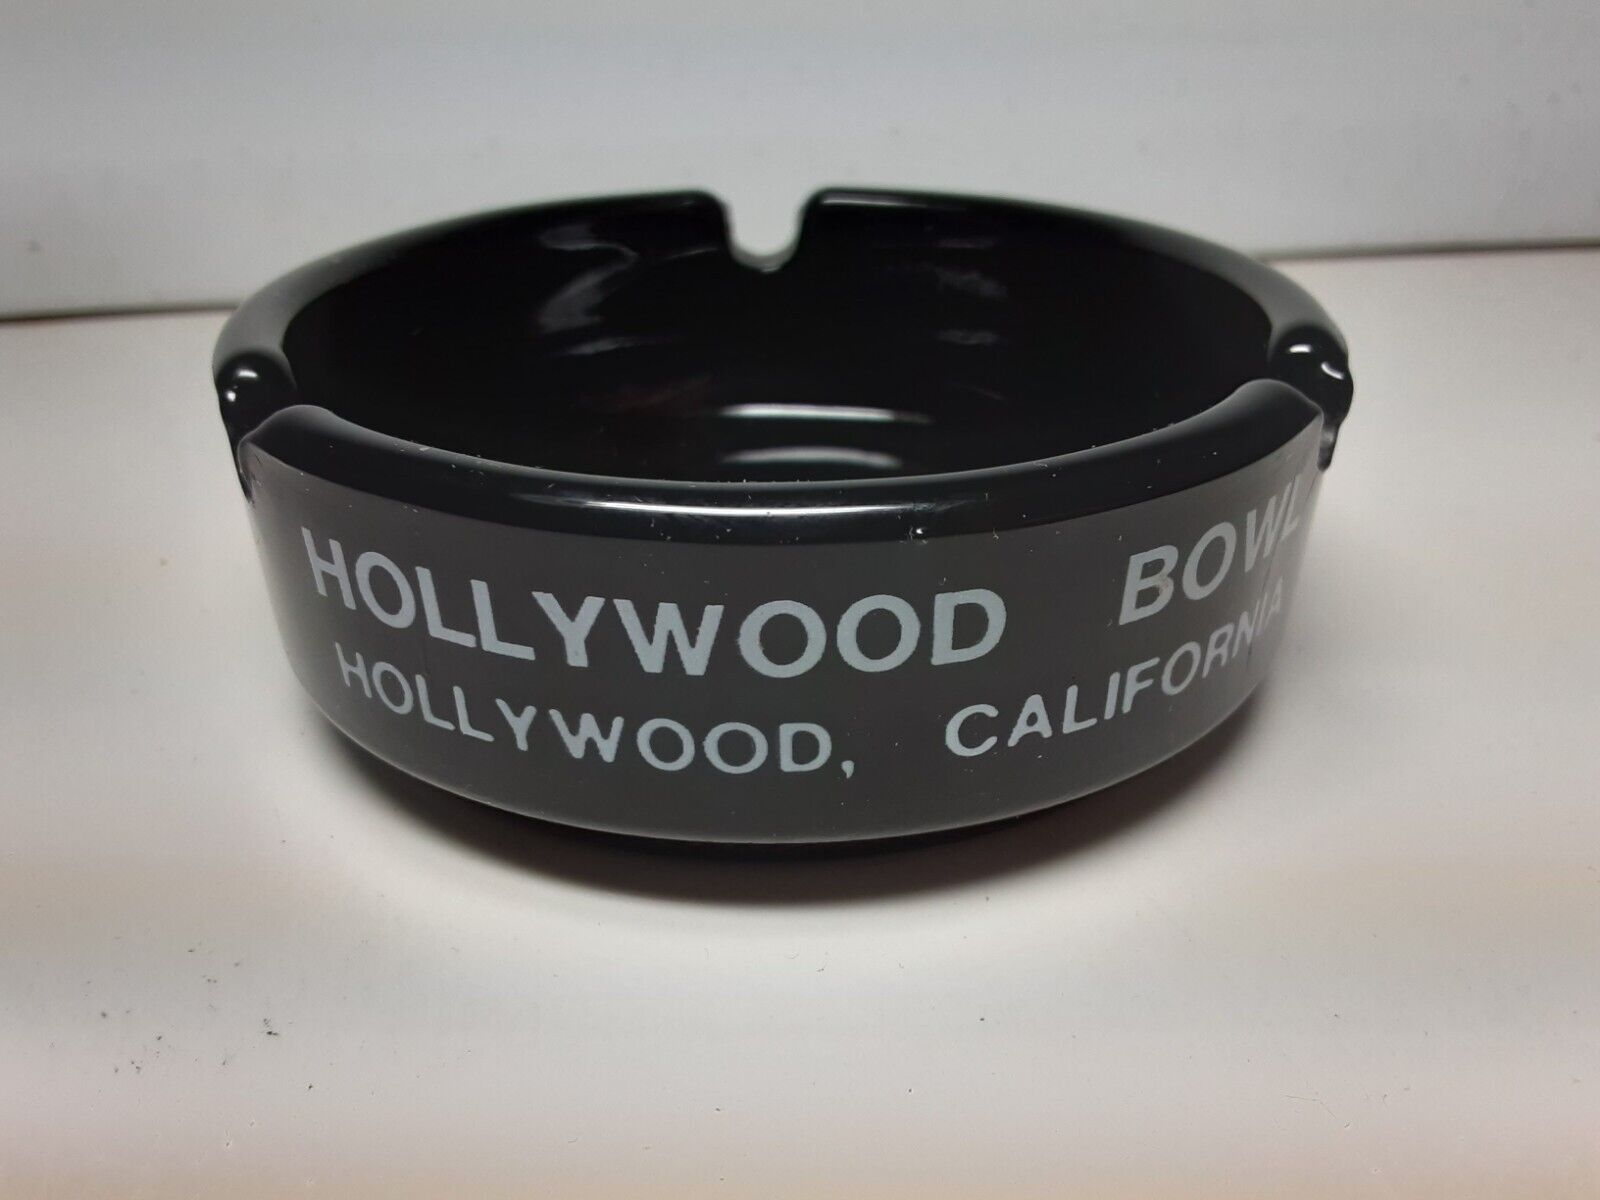 HOLLYWOOD BOWL HOLLYWOOD CALIFORNIA BLACK GLASS ASHTRAY Vintage 